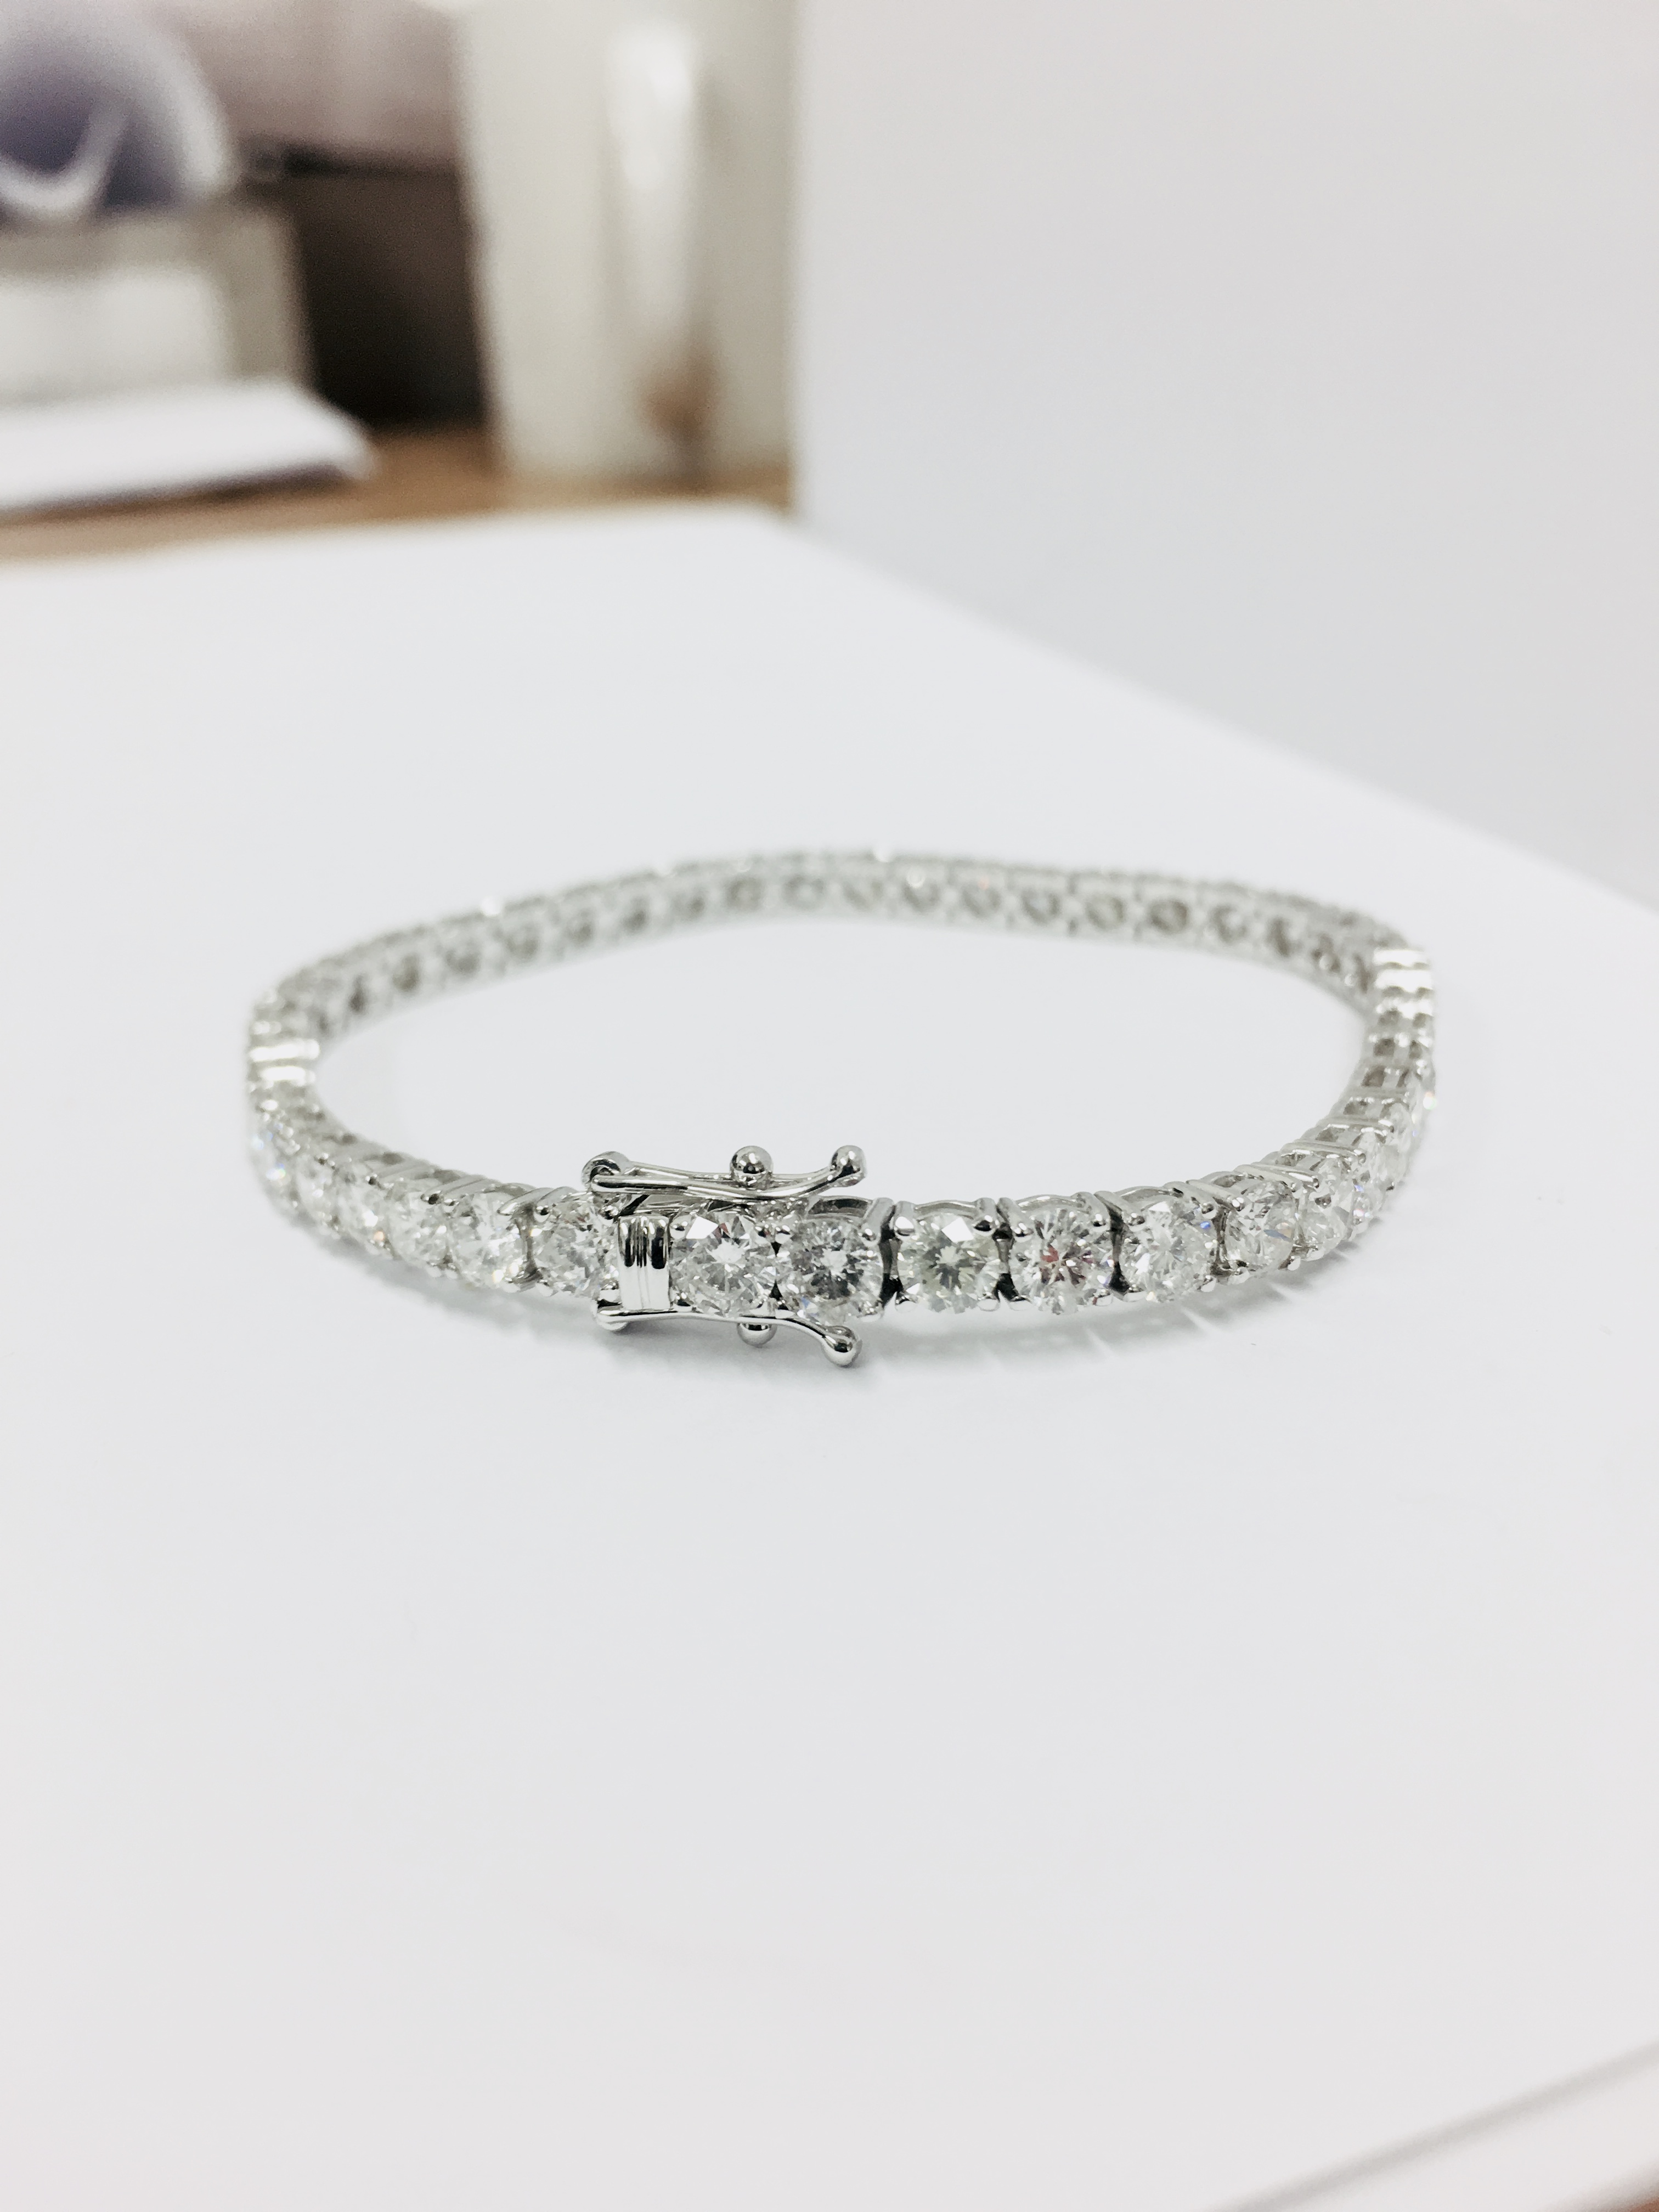 8.00ct Diamond tennis bracelet set with brilliant cut diamonds of G colour - Image 15 of 42